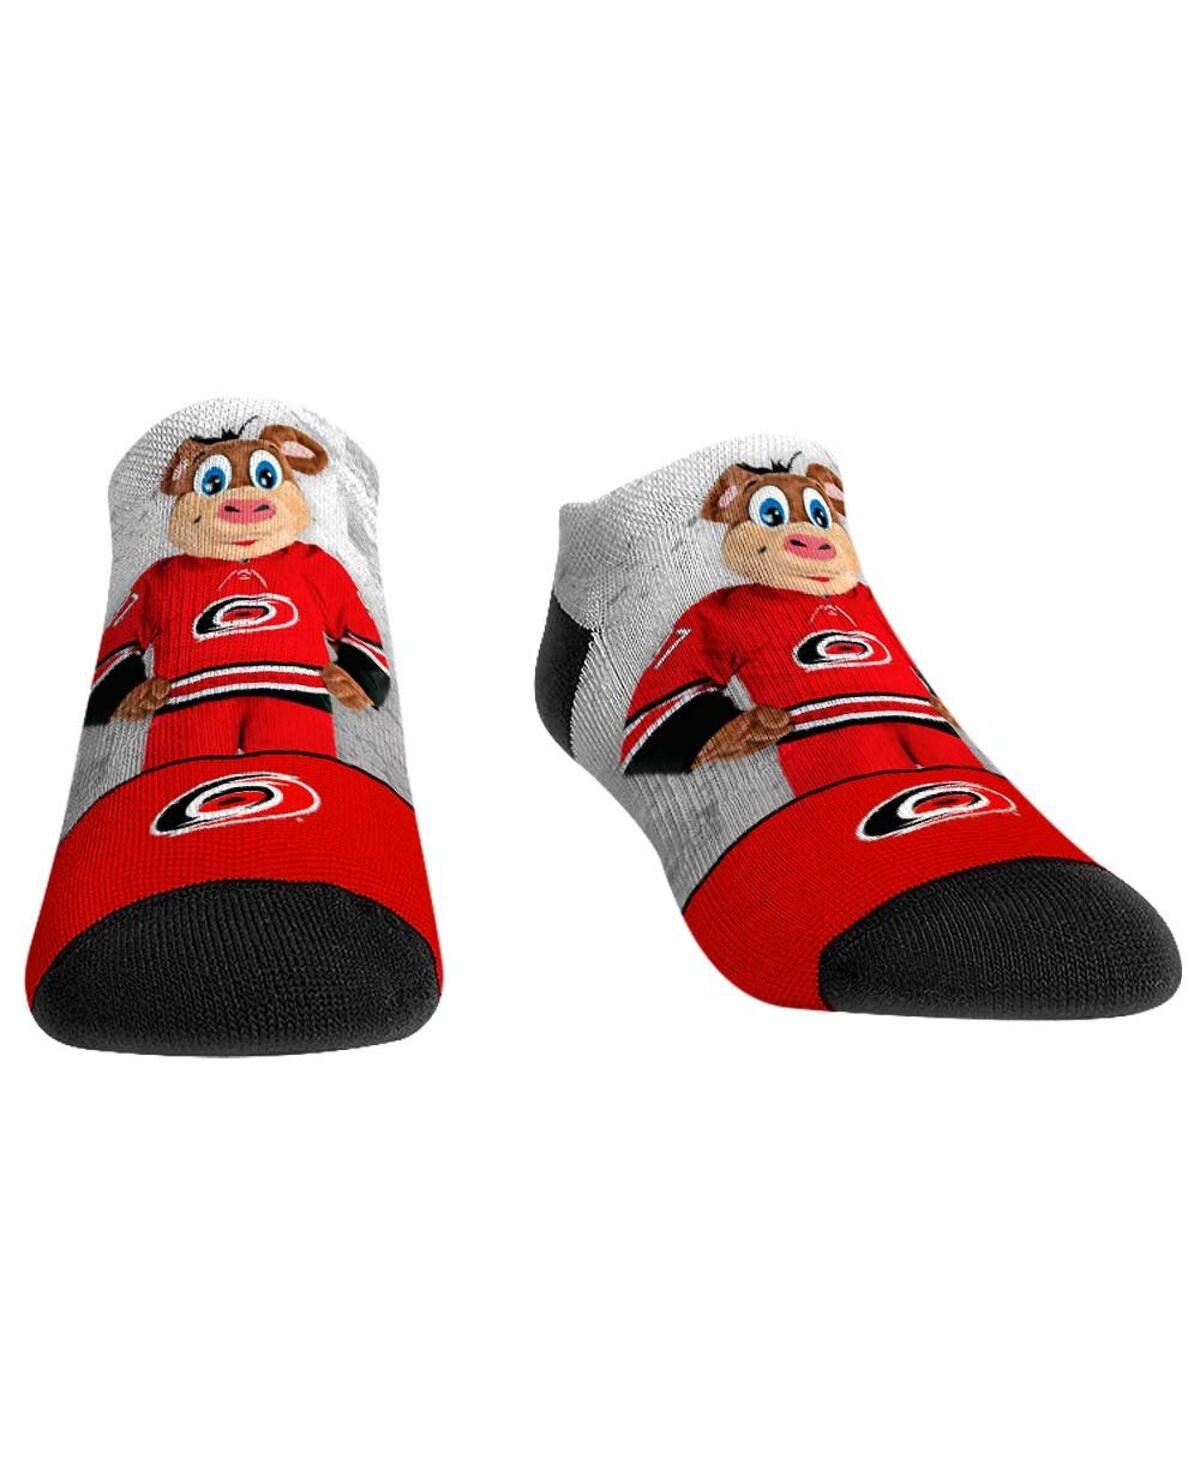 Rock 'em Men's And Women's  Socks Carolina Hurricanes Mascot Walkout Low Cut Socks In Red